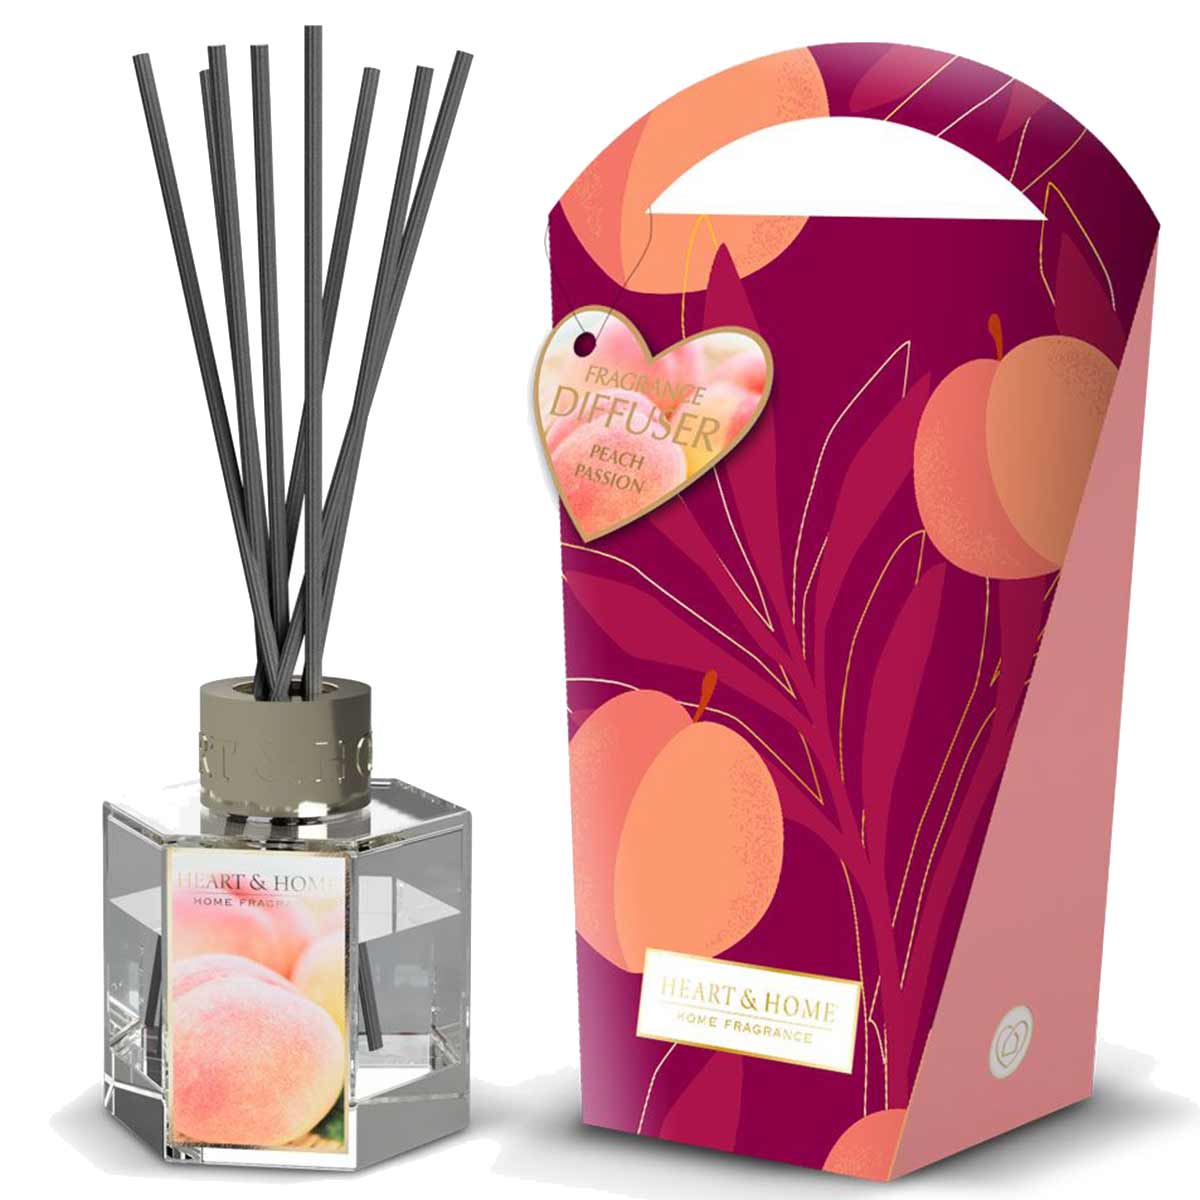 Heart and Home Stick Diffuser - Peach Passion